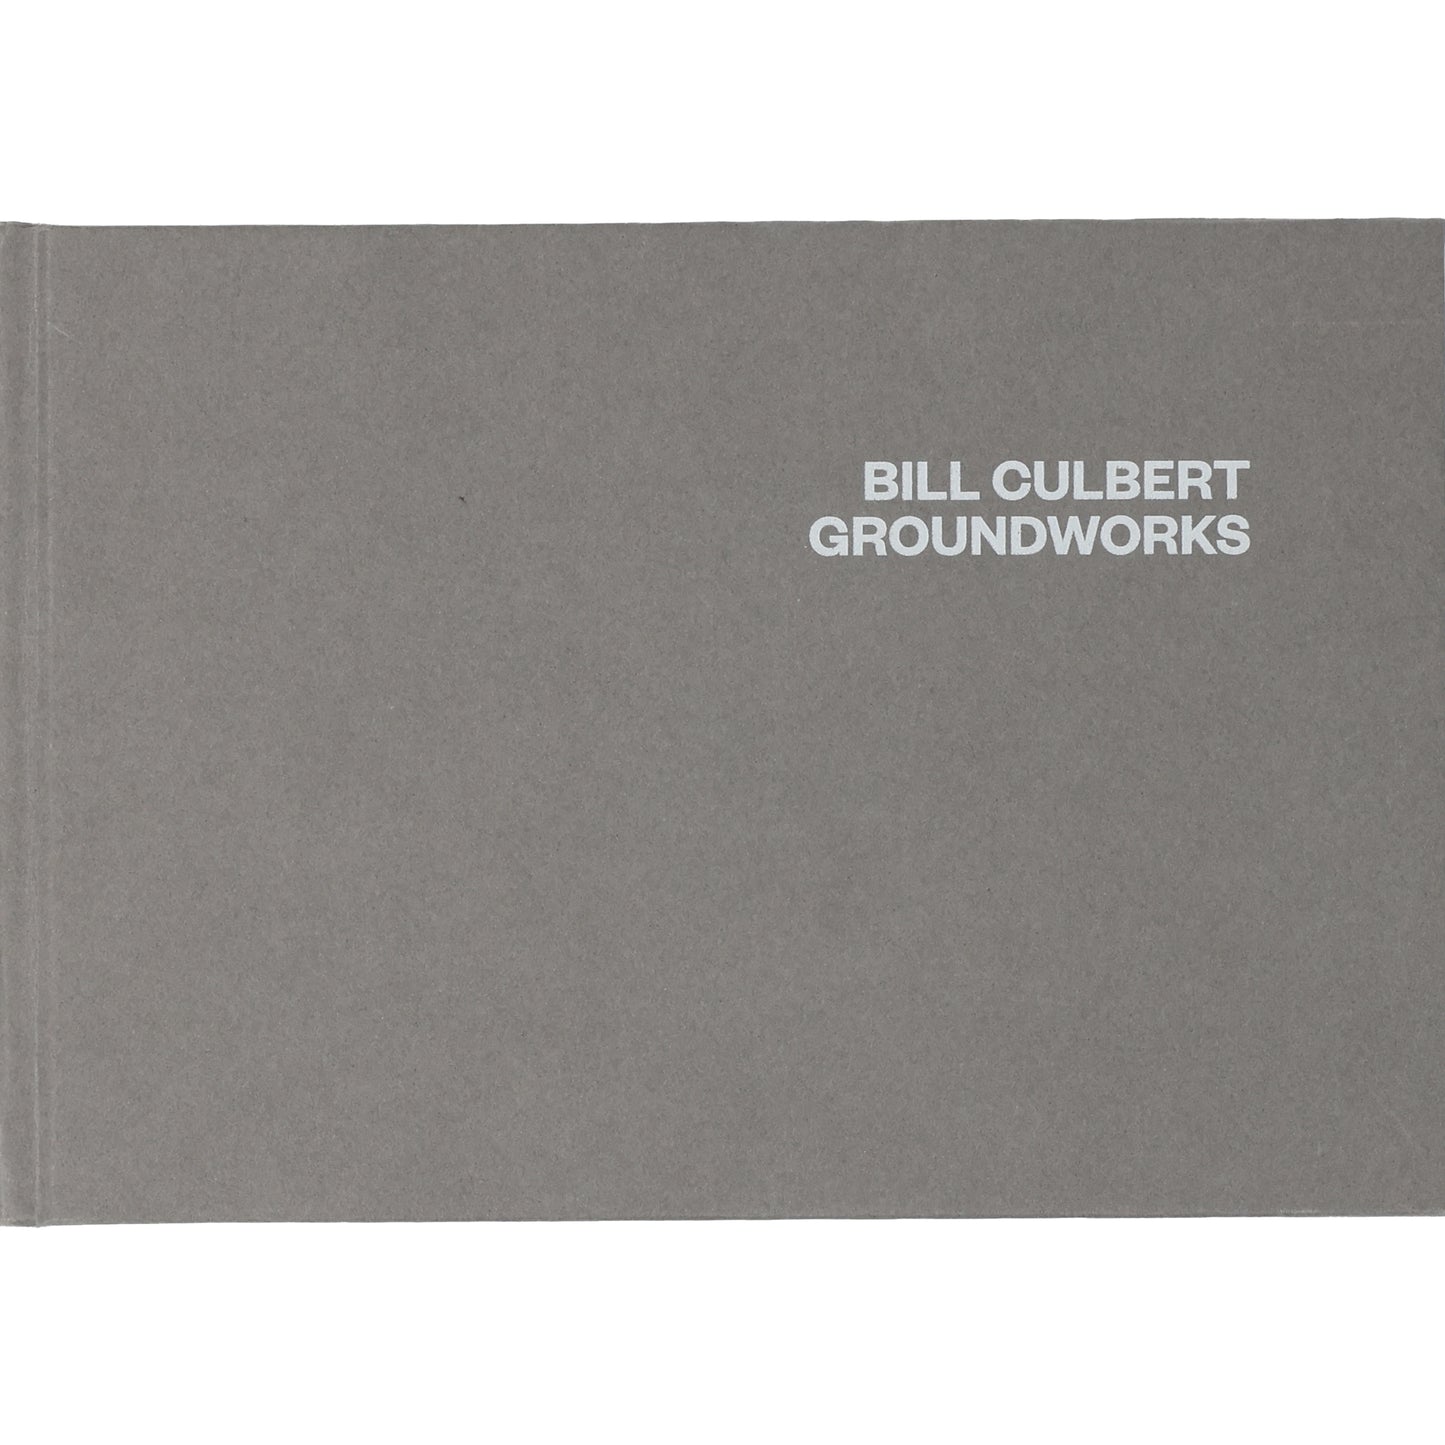 Bill Culbert: Groundworks